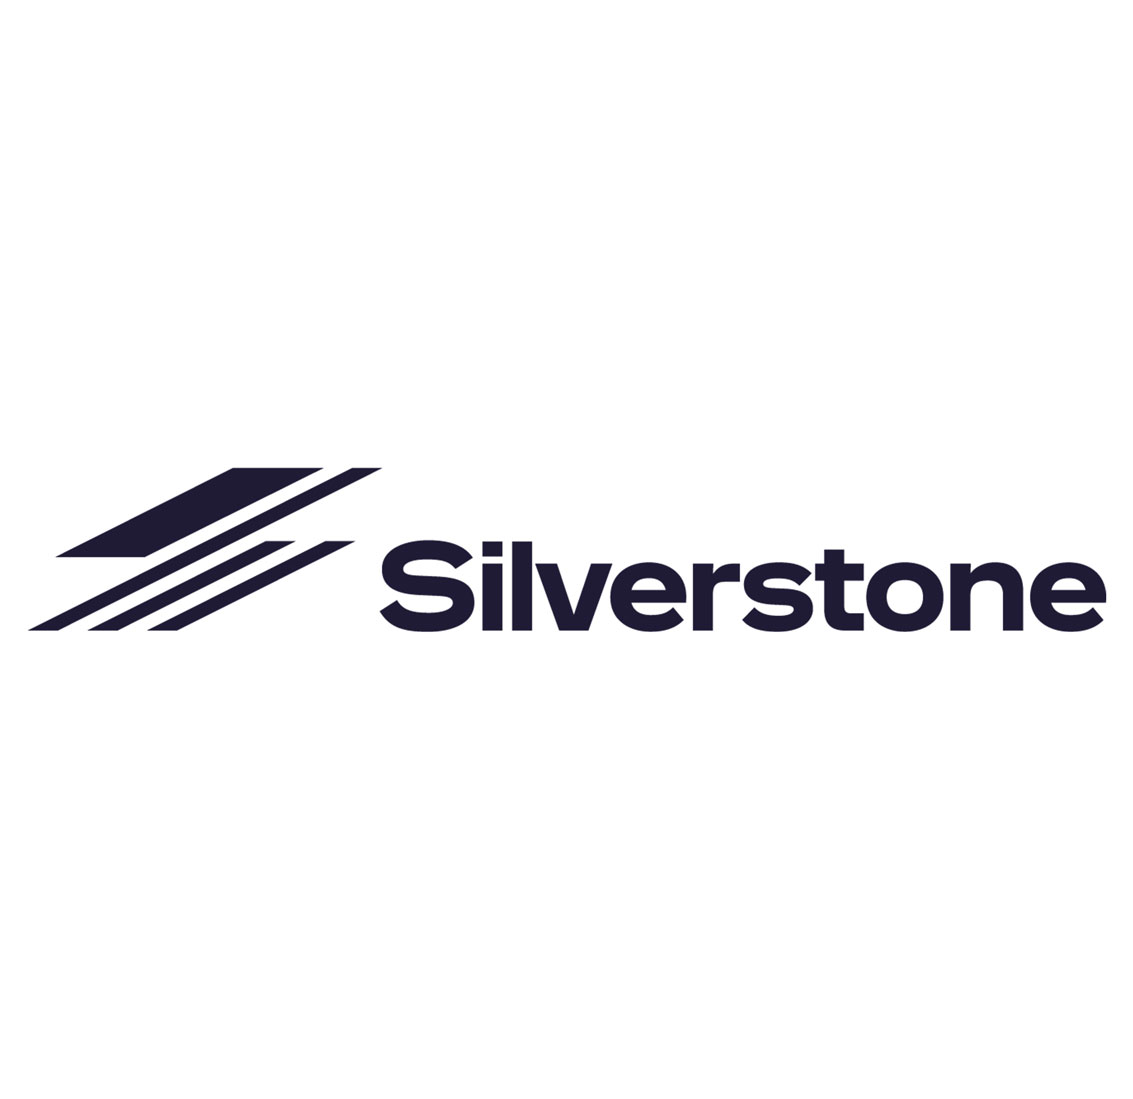 A client - Silverstone Logo